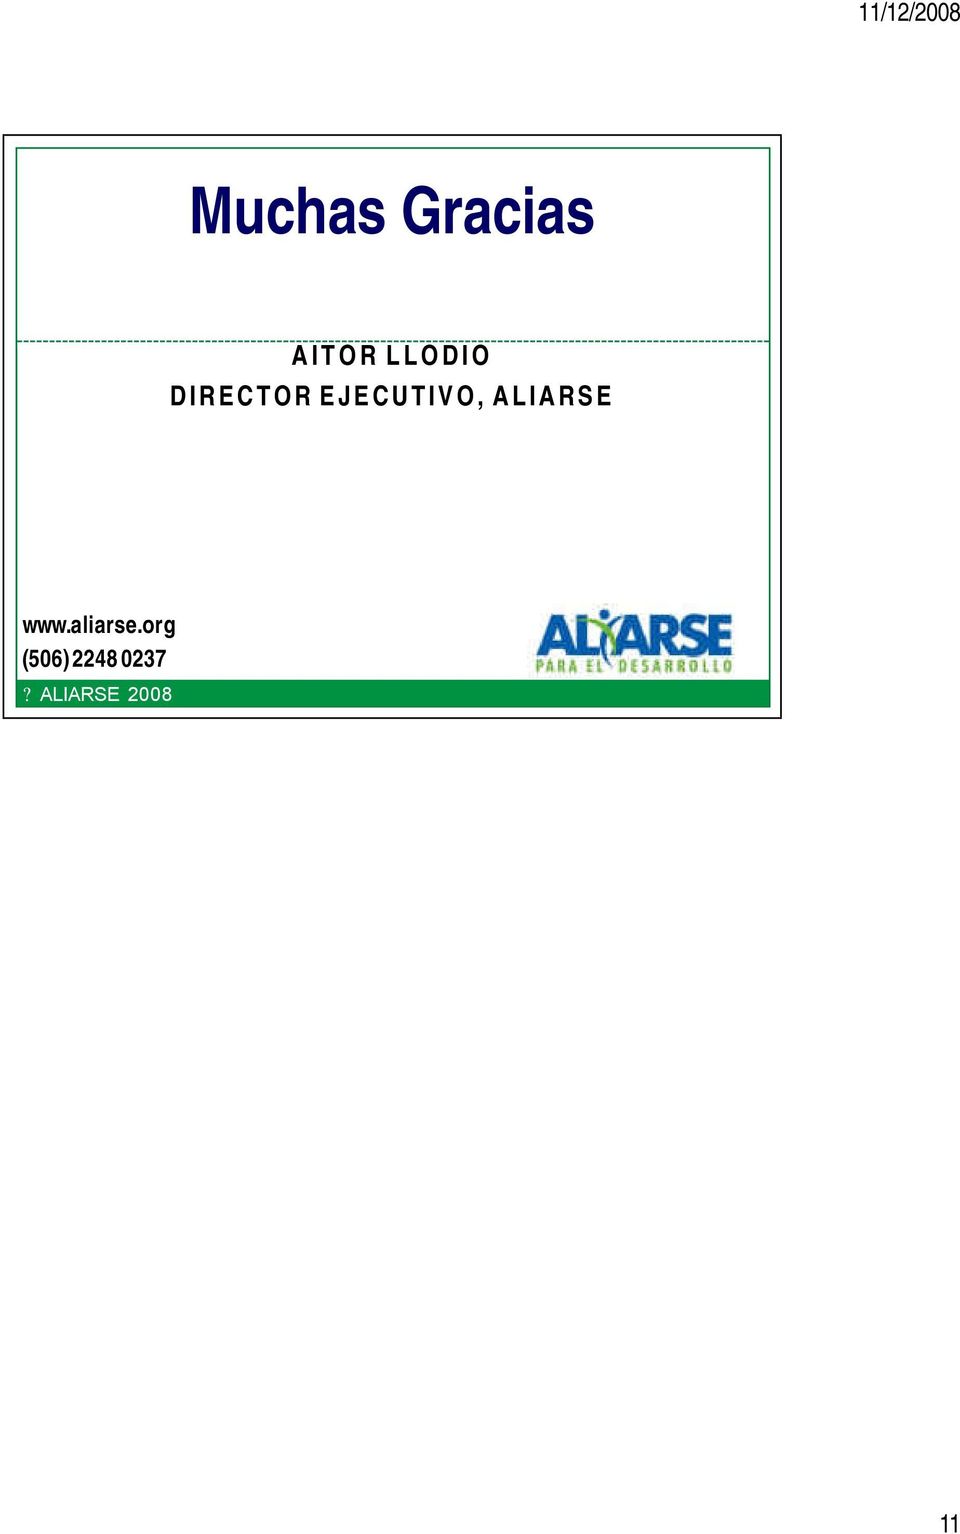 ALIARSE@ALIARSE.ORG www.